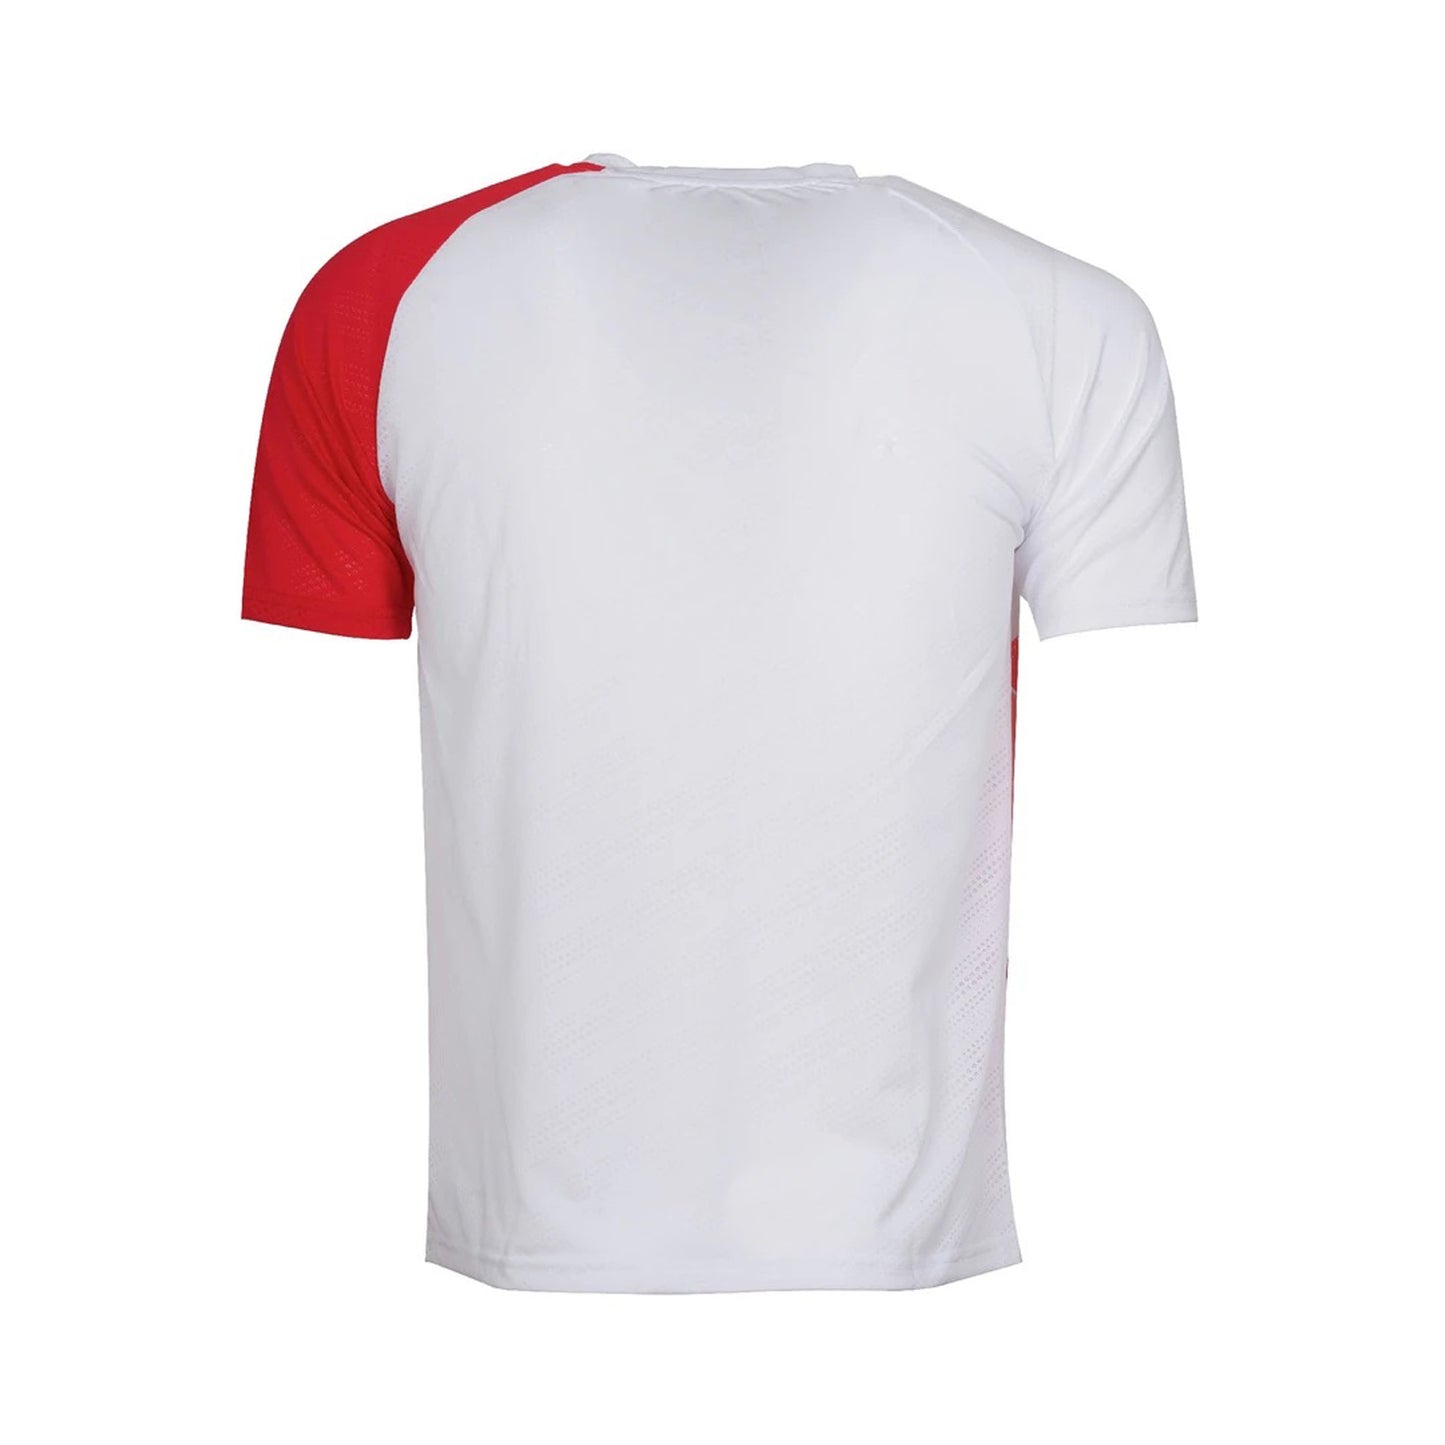 Li-Ning ATSS993 Round Neck Badminton T-Shirt, White - Best Price online Prokicksports.com